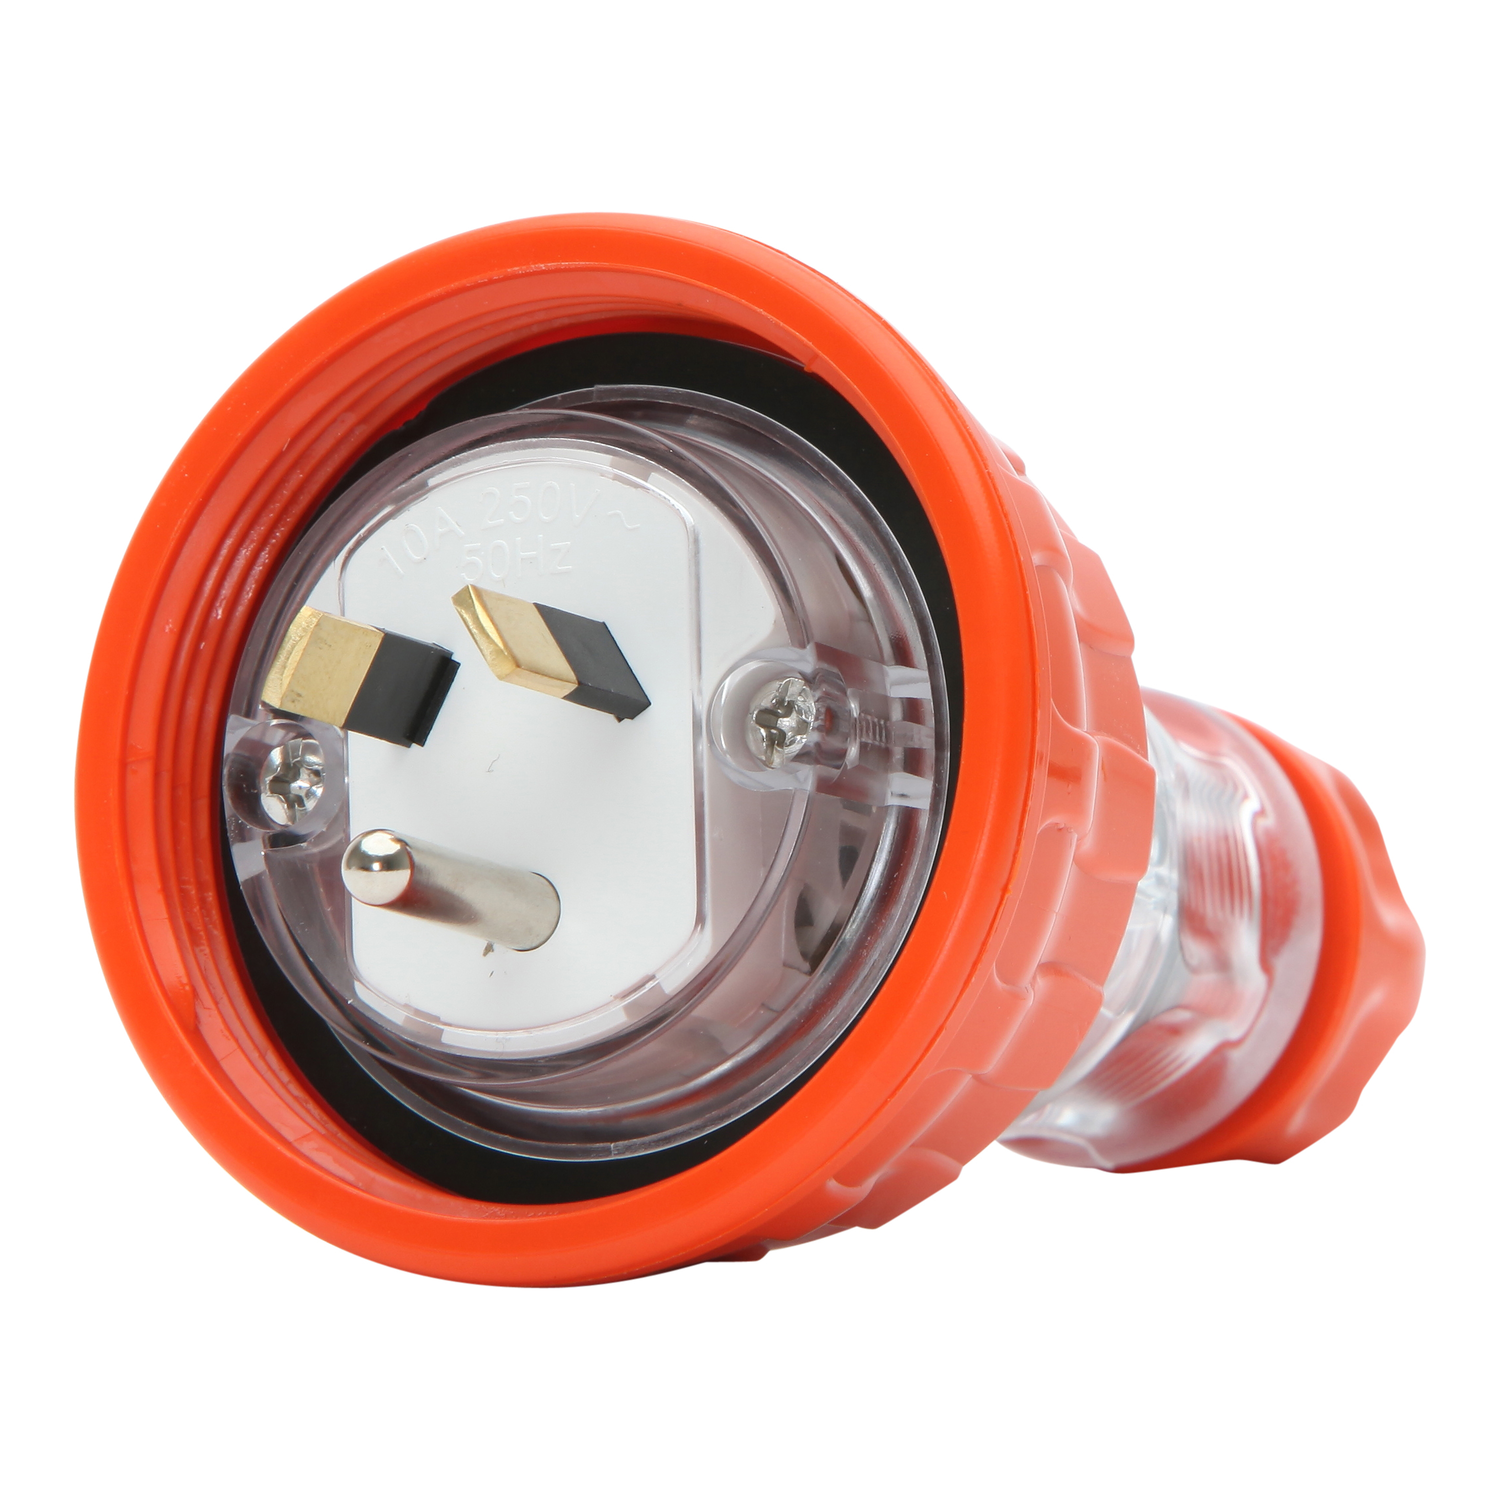 PDL 56 Series - Plug Straight 10A 250V 1-Phase Round Earth Pin IP66 - Orange